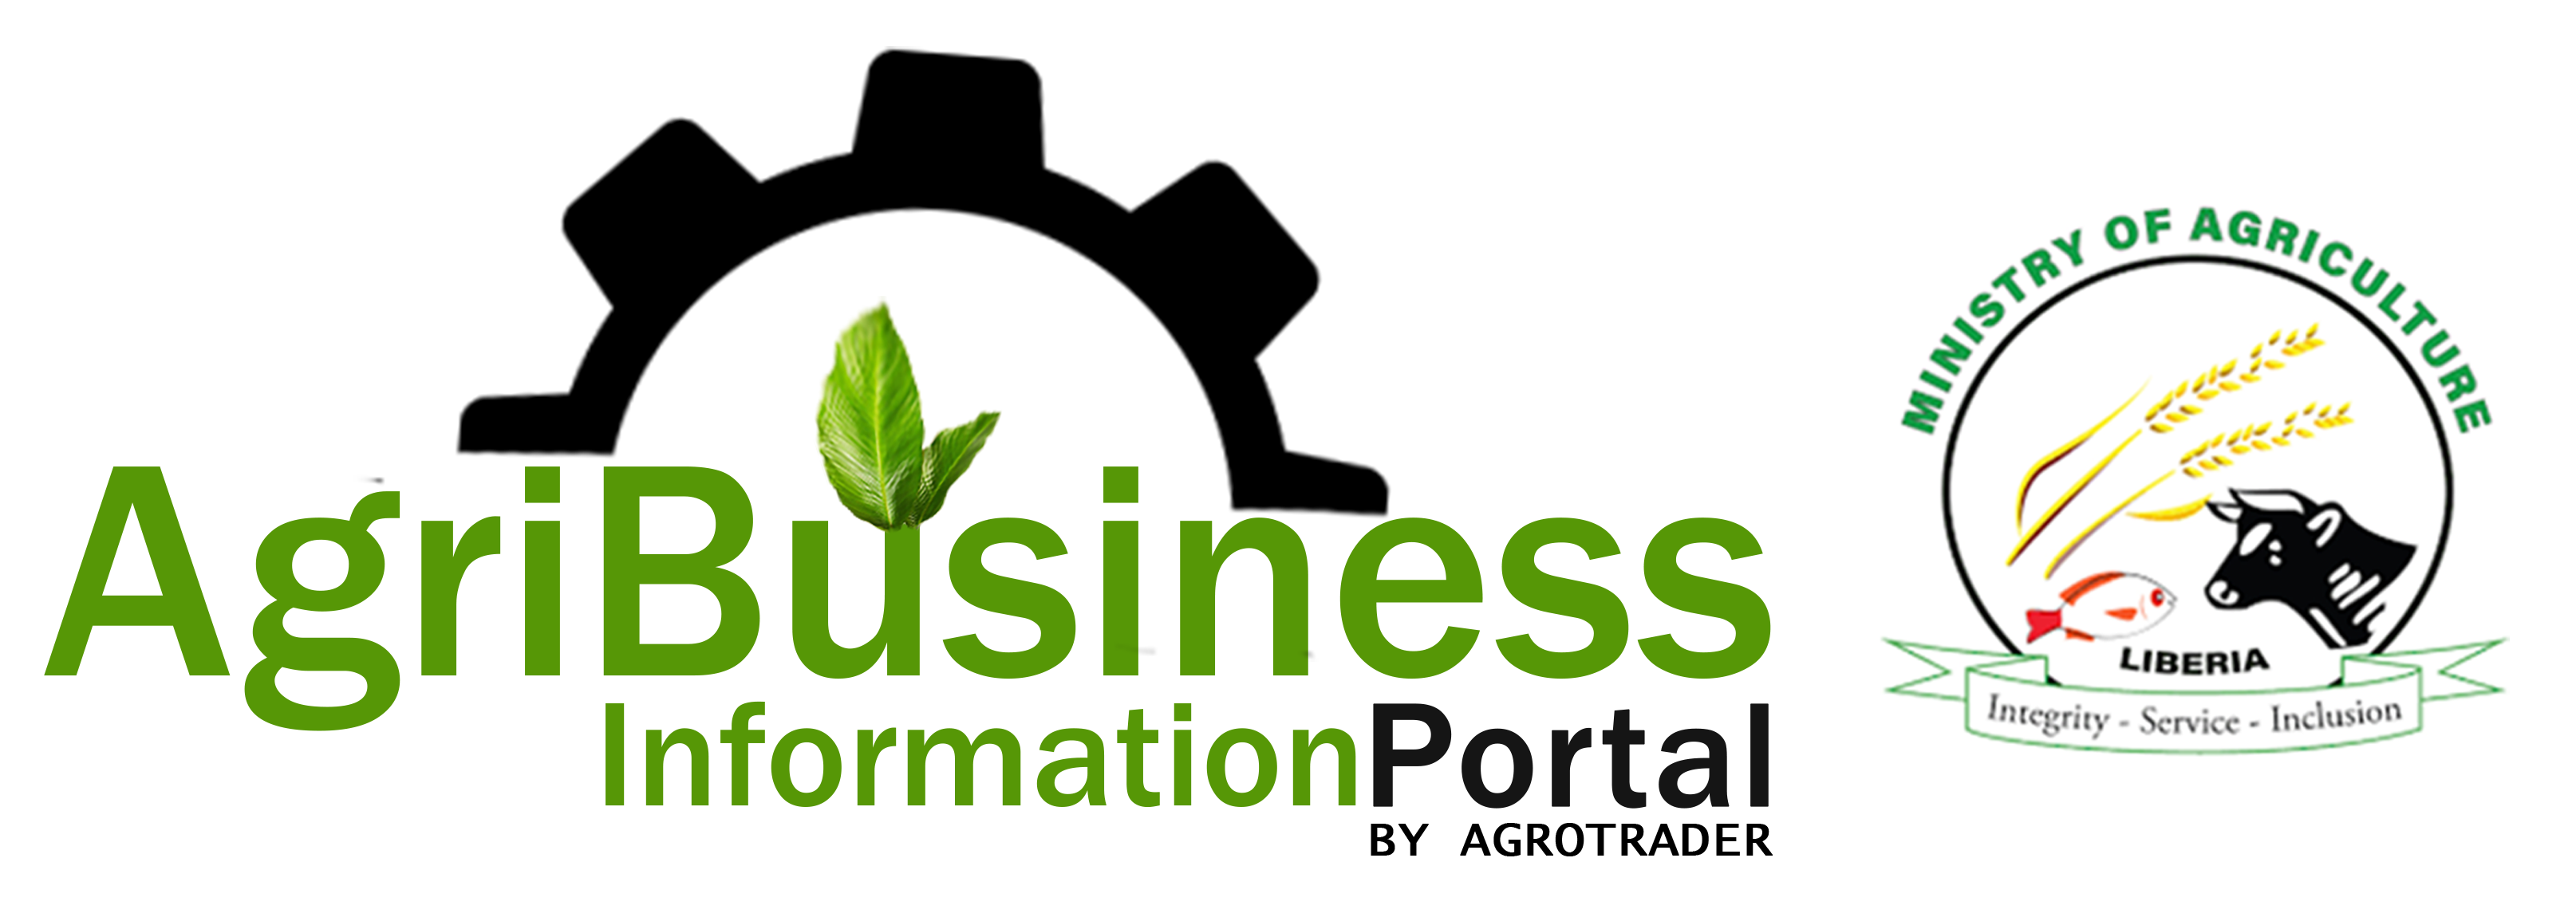 Agri Business Portal